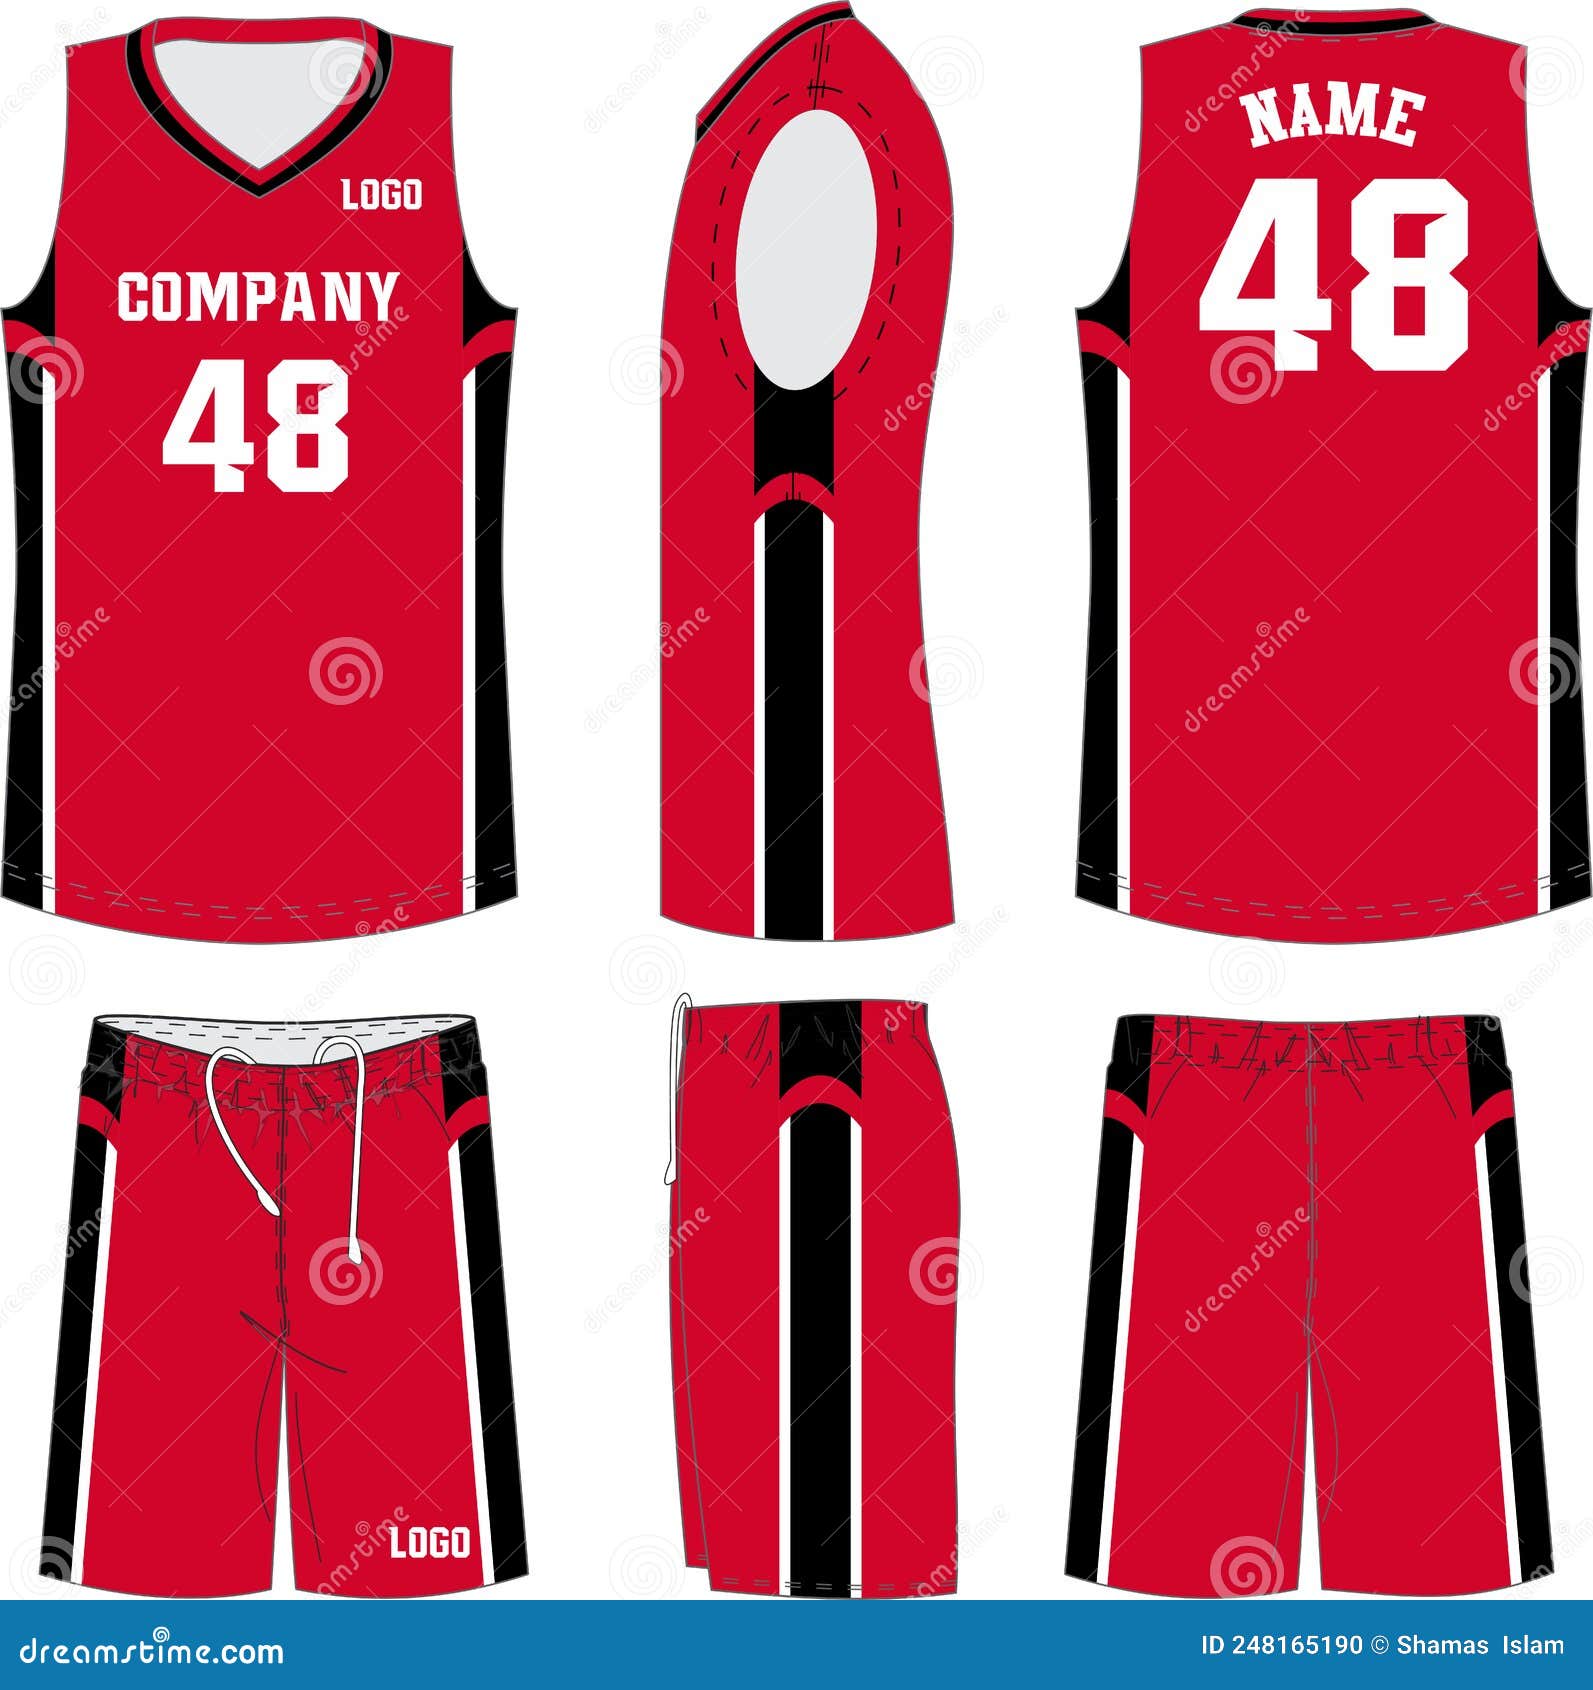 Premium Vector  Basketball jersey mockup vector line art